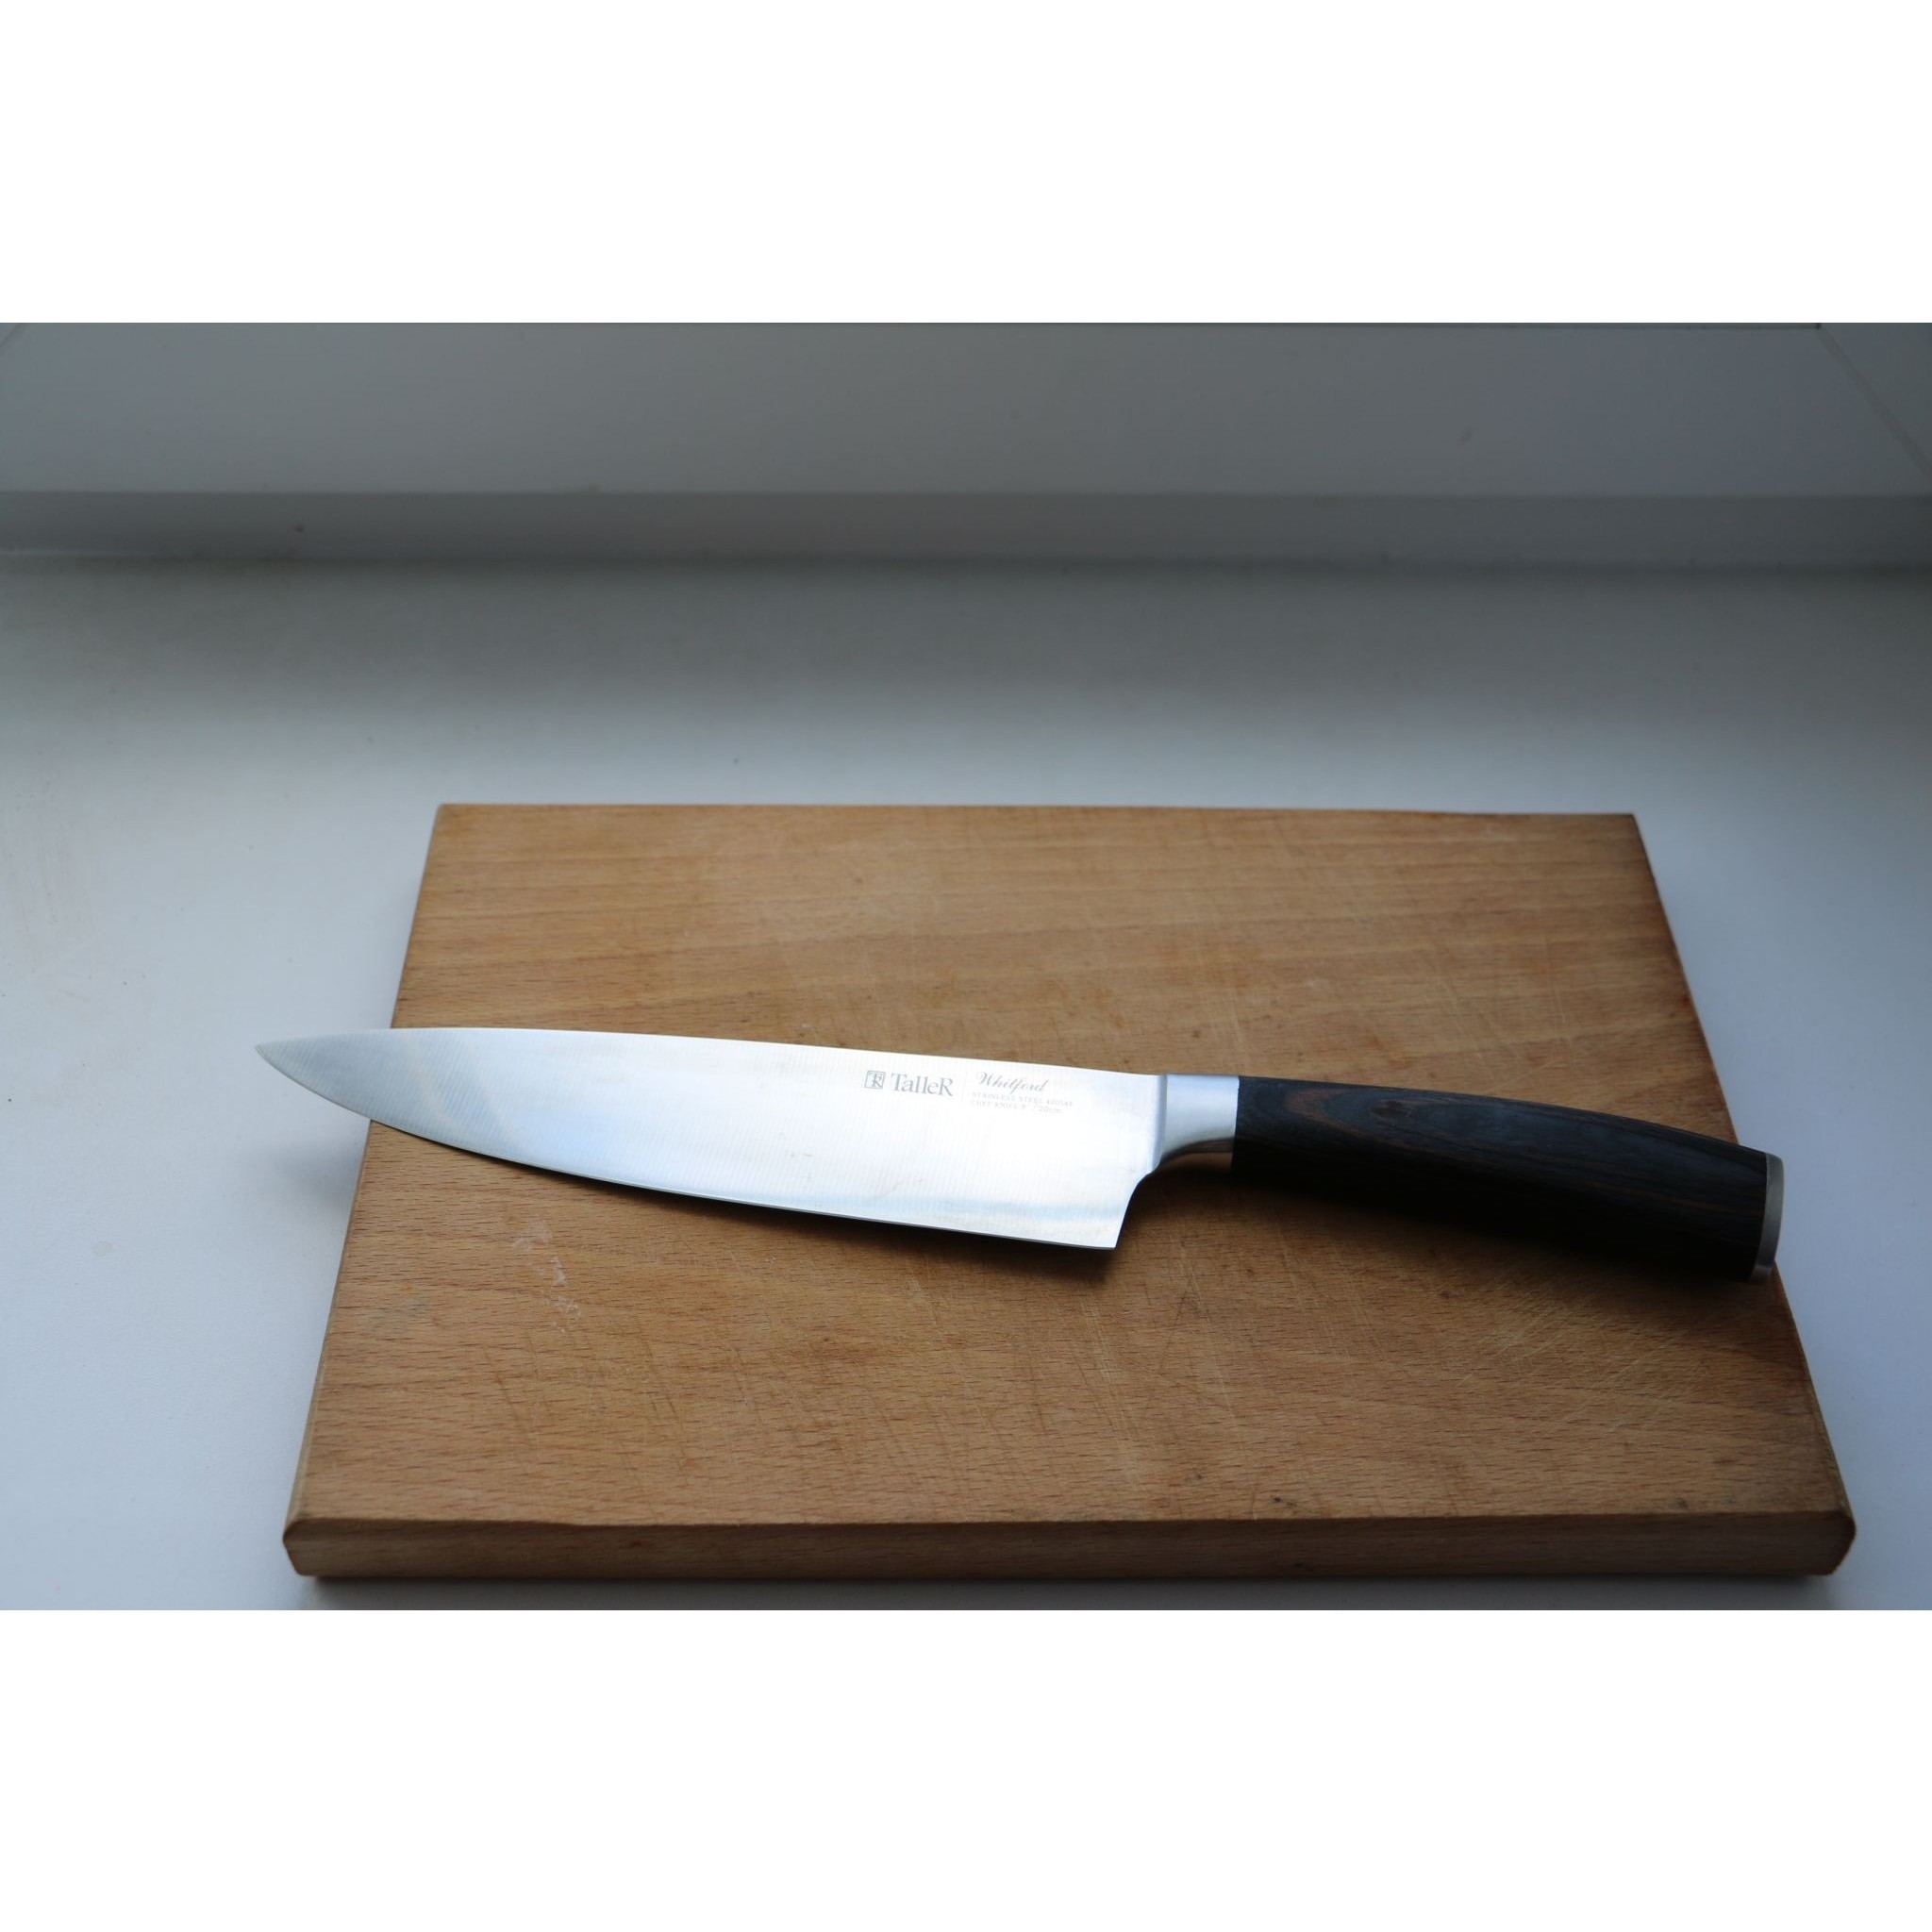 Taller expertise. Кухонный нож Taller tr-22079. Нож кухонный Taller tr-22065. Taller 22301 нож поварской. Нож Taller Whitford.